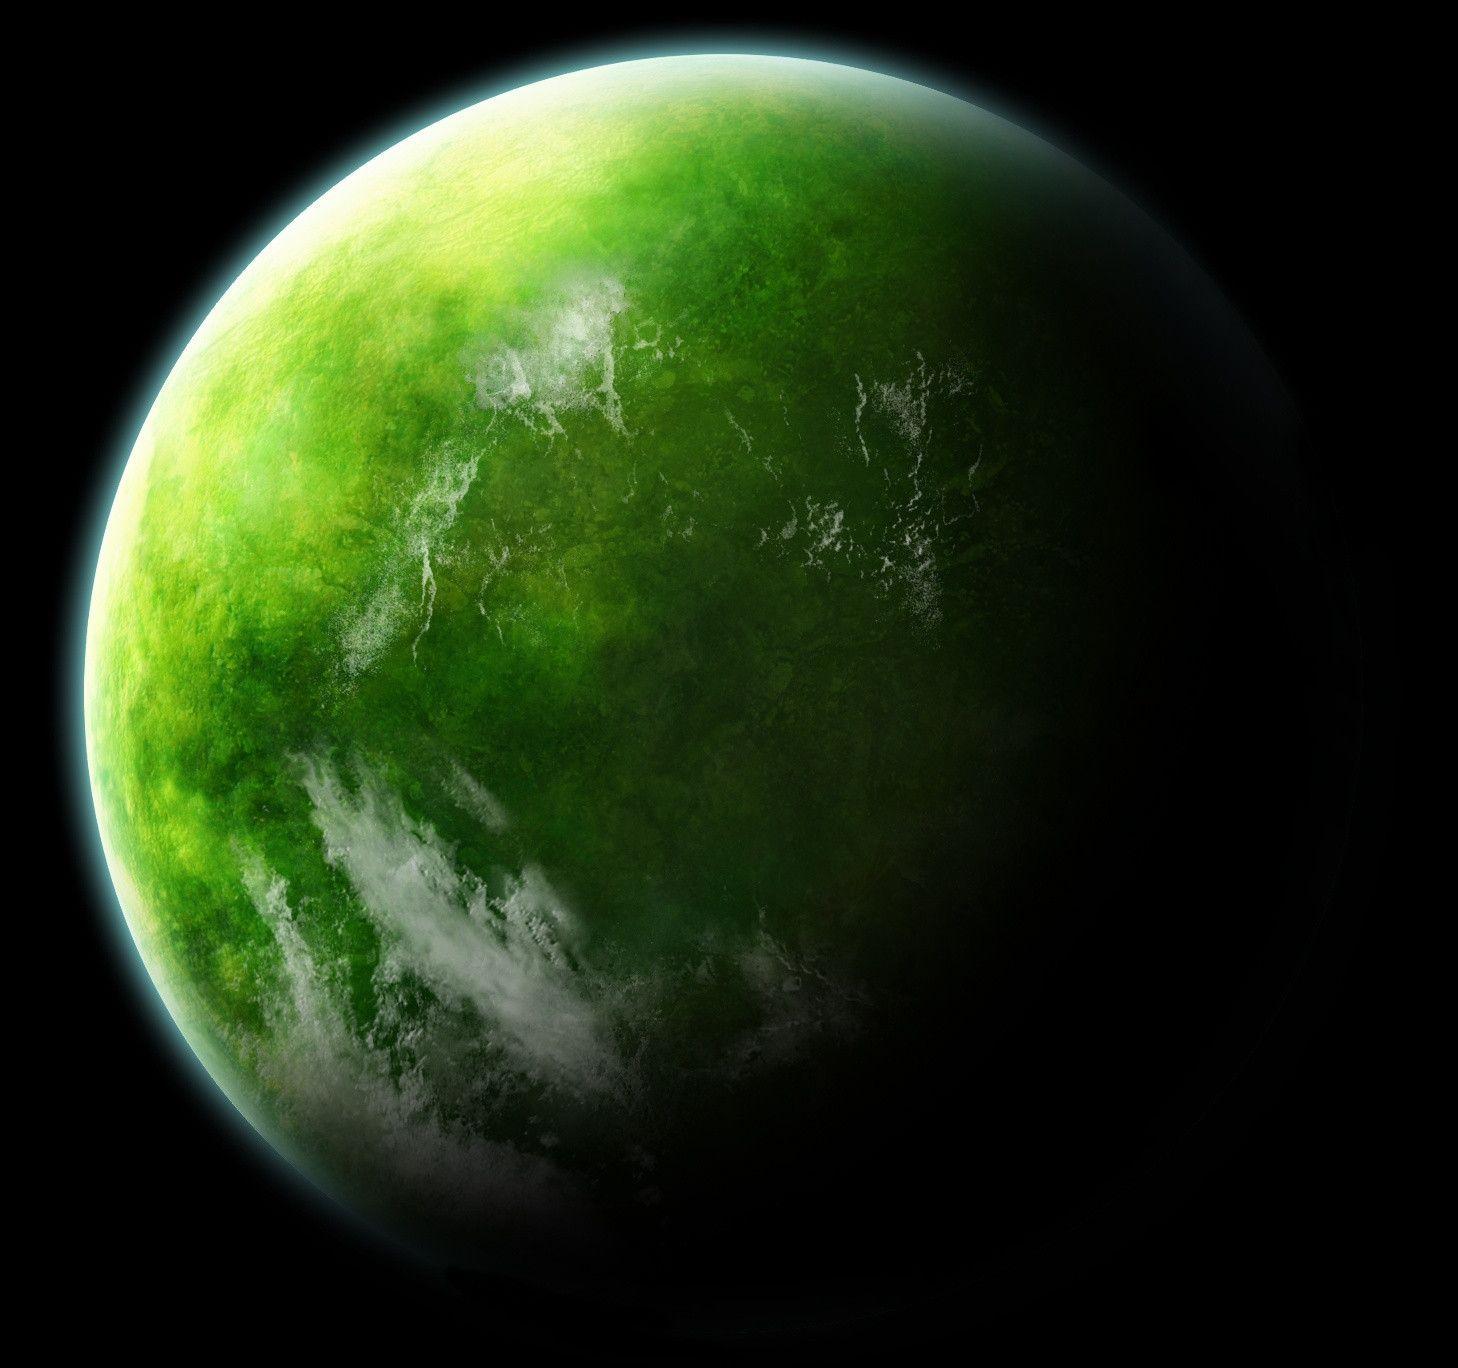 The Green Planet Wallpaper